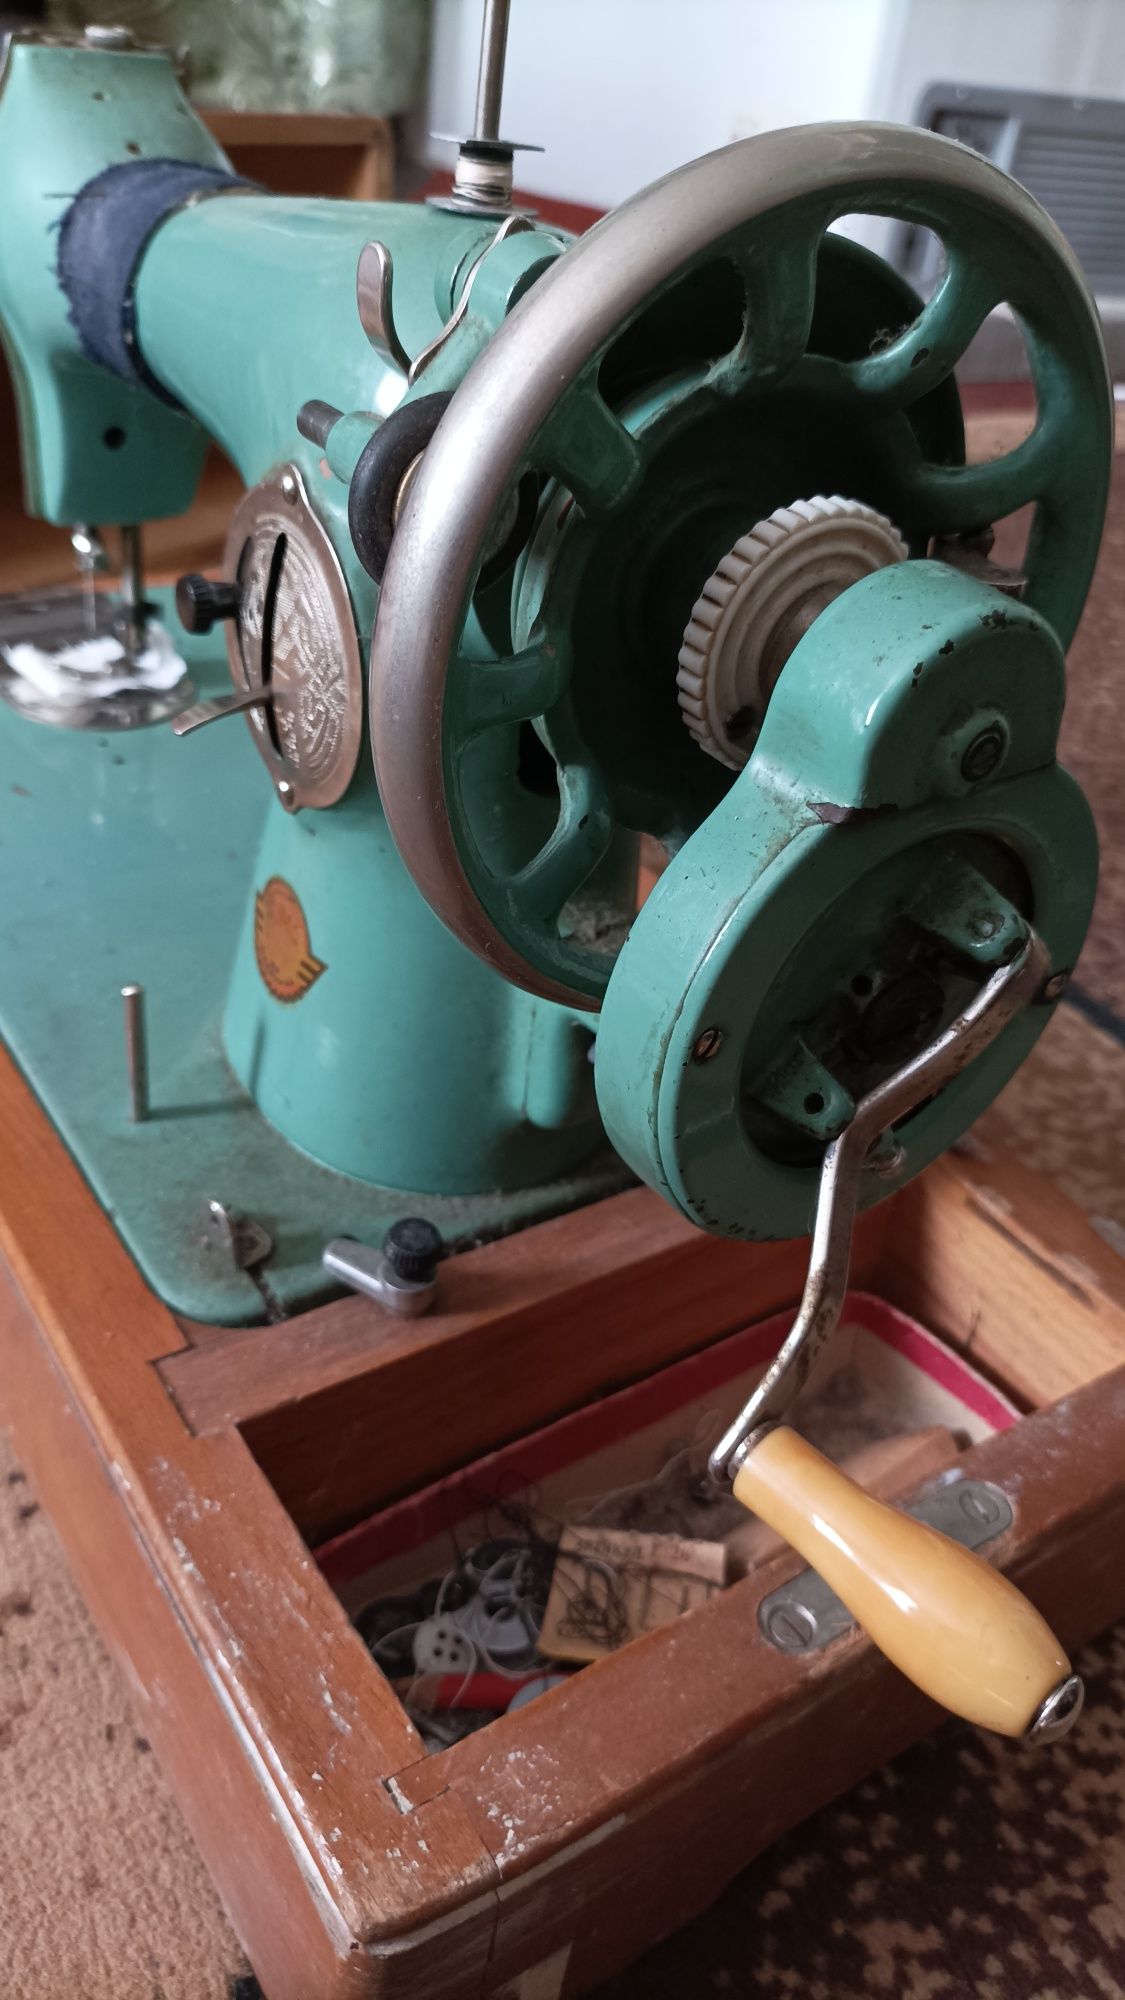 Ручна швейна машинка